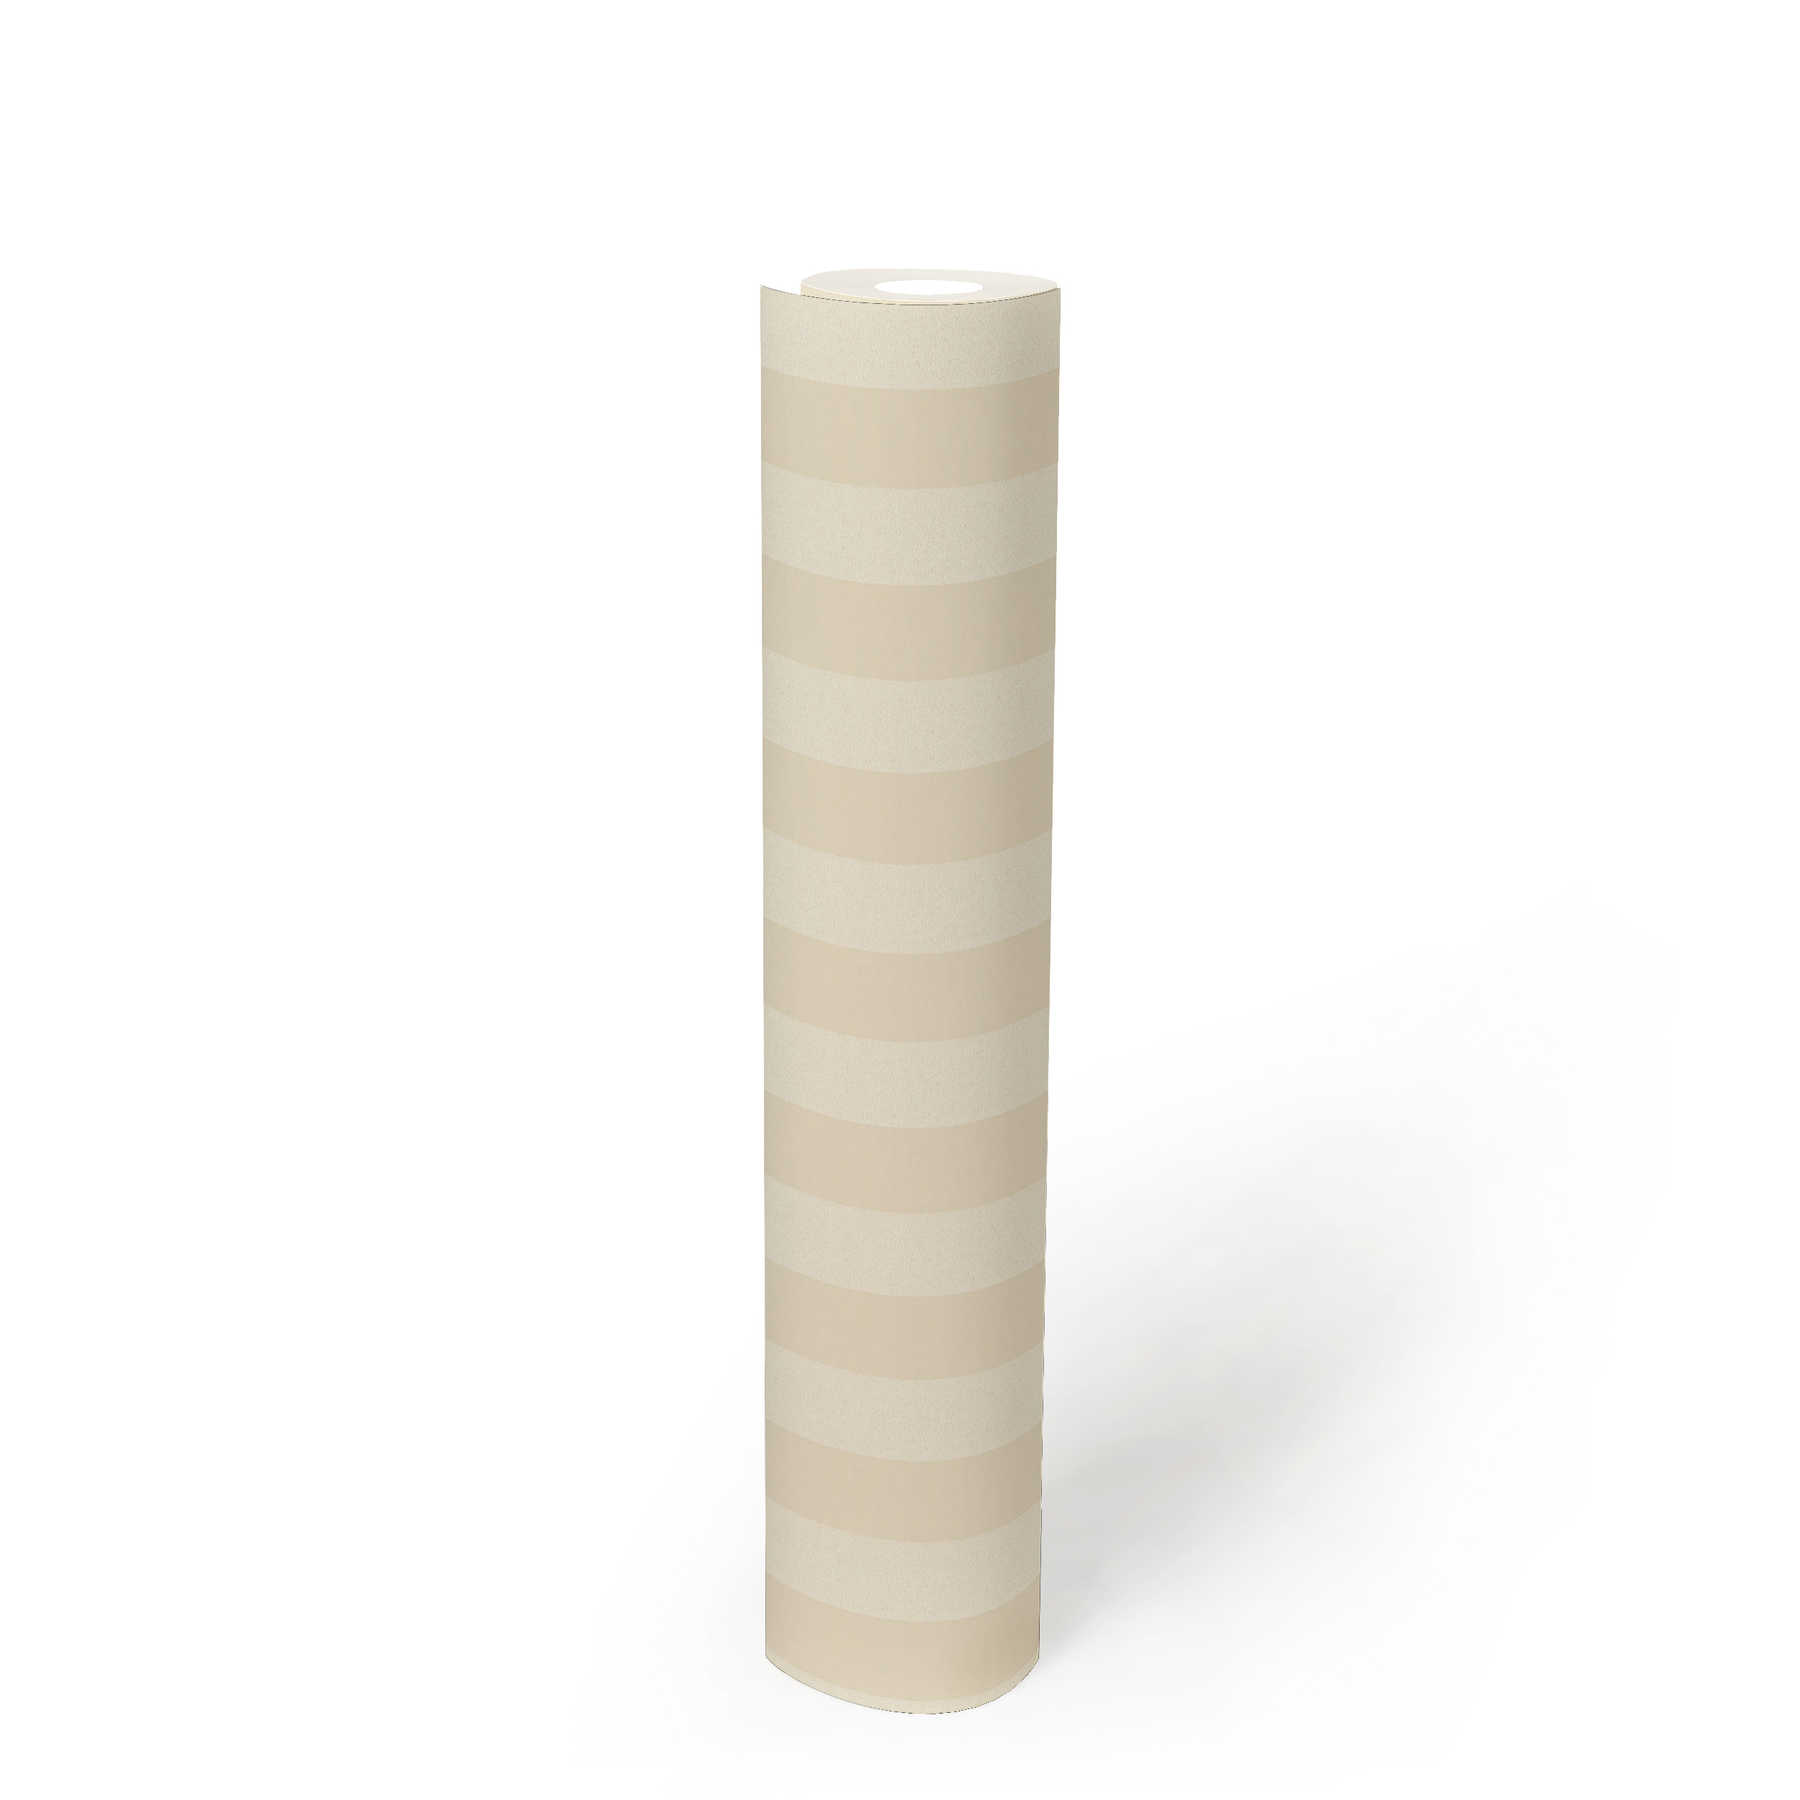             Streepjesbehang met patroon in licht crème - beige, crème
        